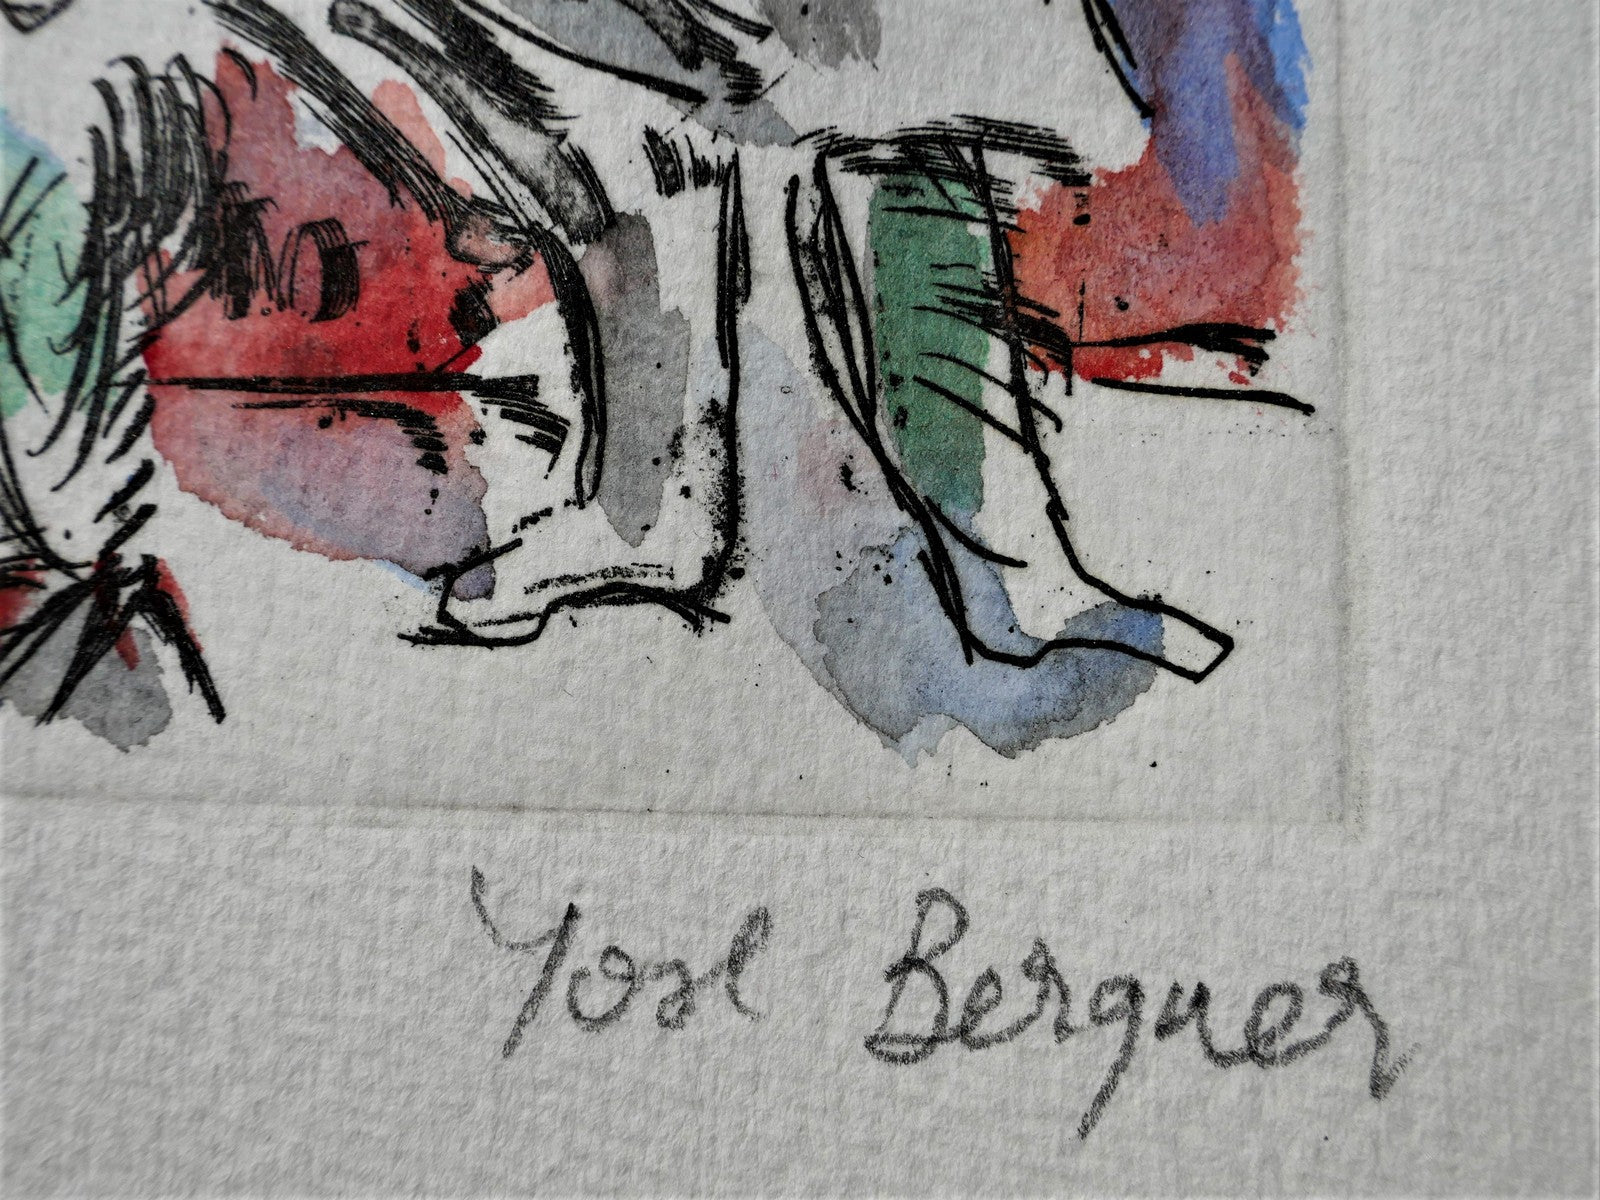 Yosl Bergner 'Kafka's Vulture'